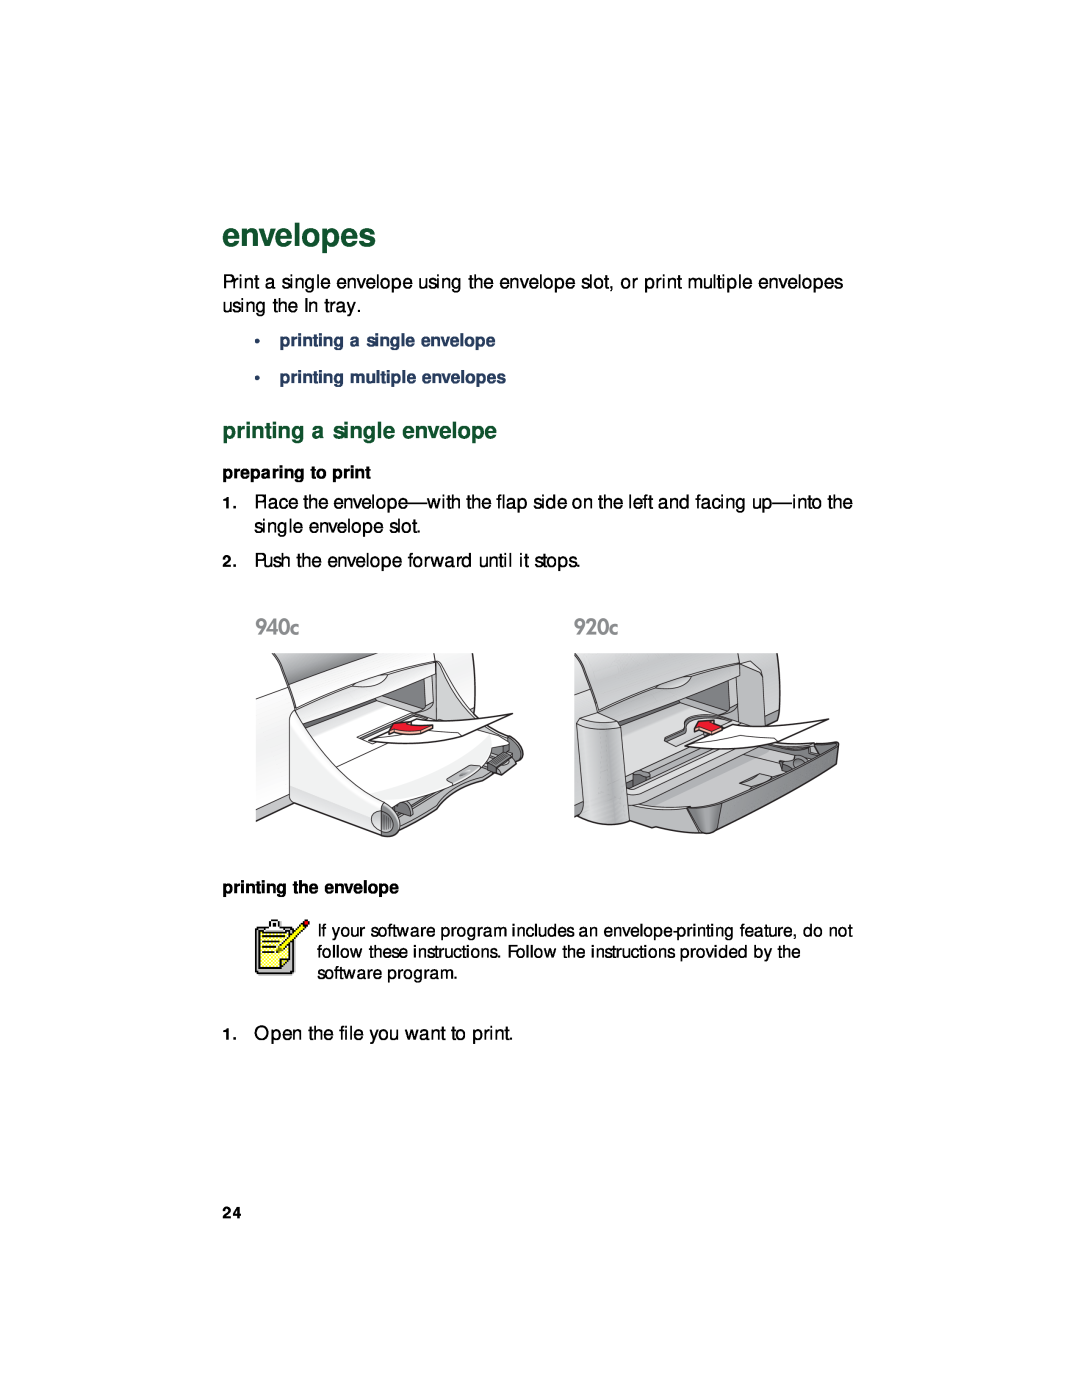 HP 940c, 920c, 948c manual printing a single envelope printing multiple envelopes 